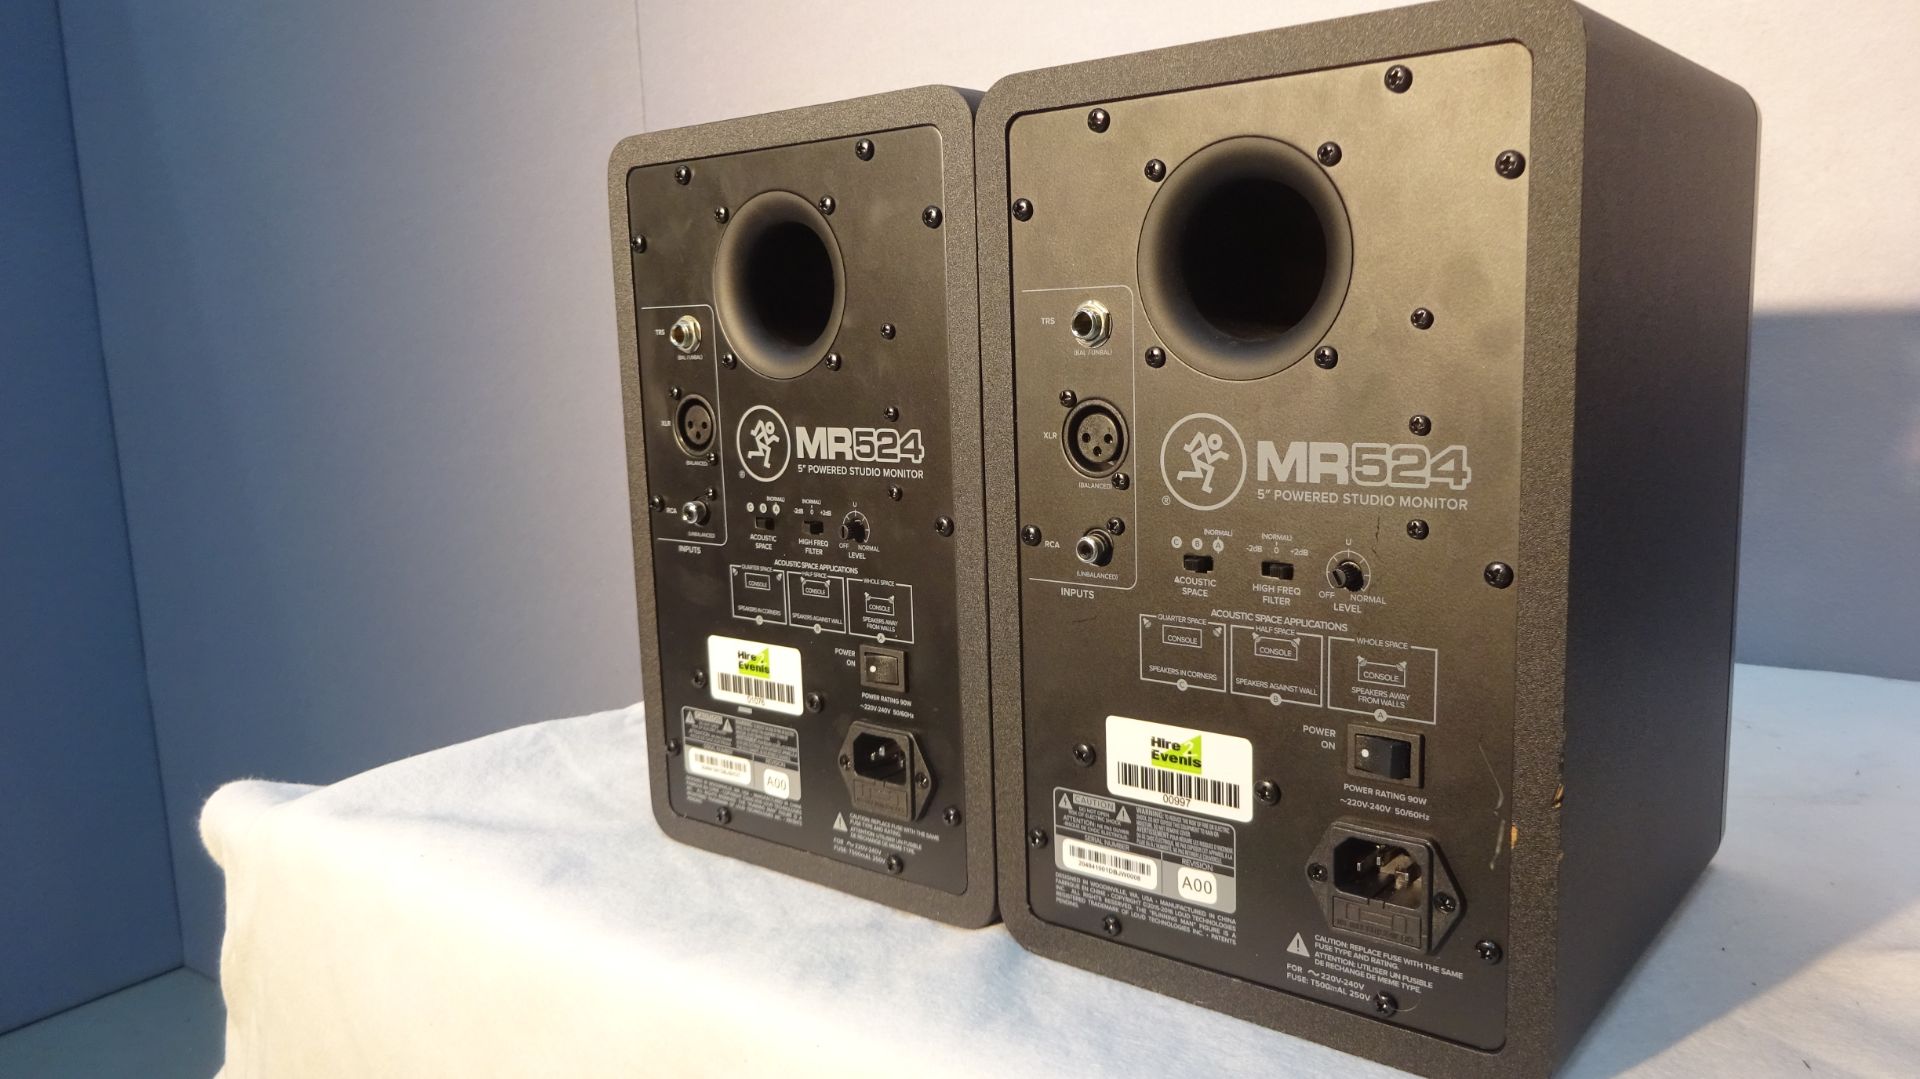 2 x MR524 Powered Studio Monitor Speaker c/w 2 Flights Cases VERY LITTLE USE - Image 4 of 11